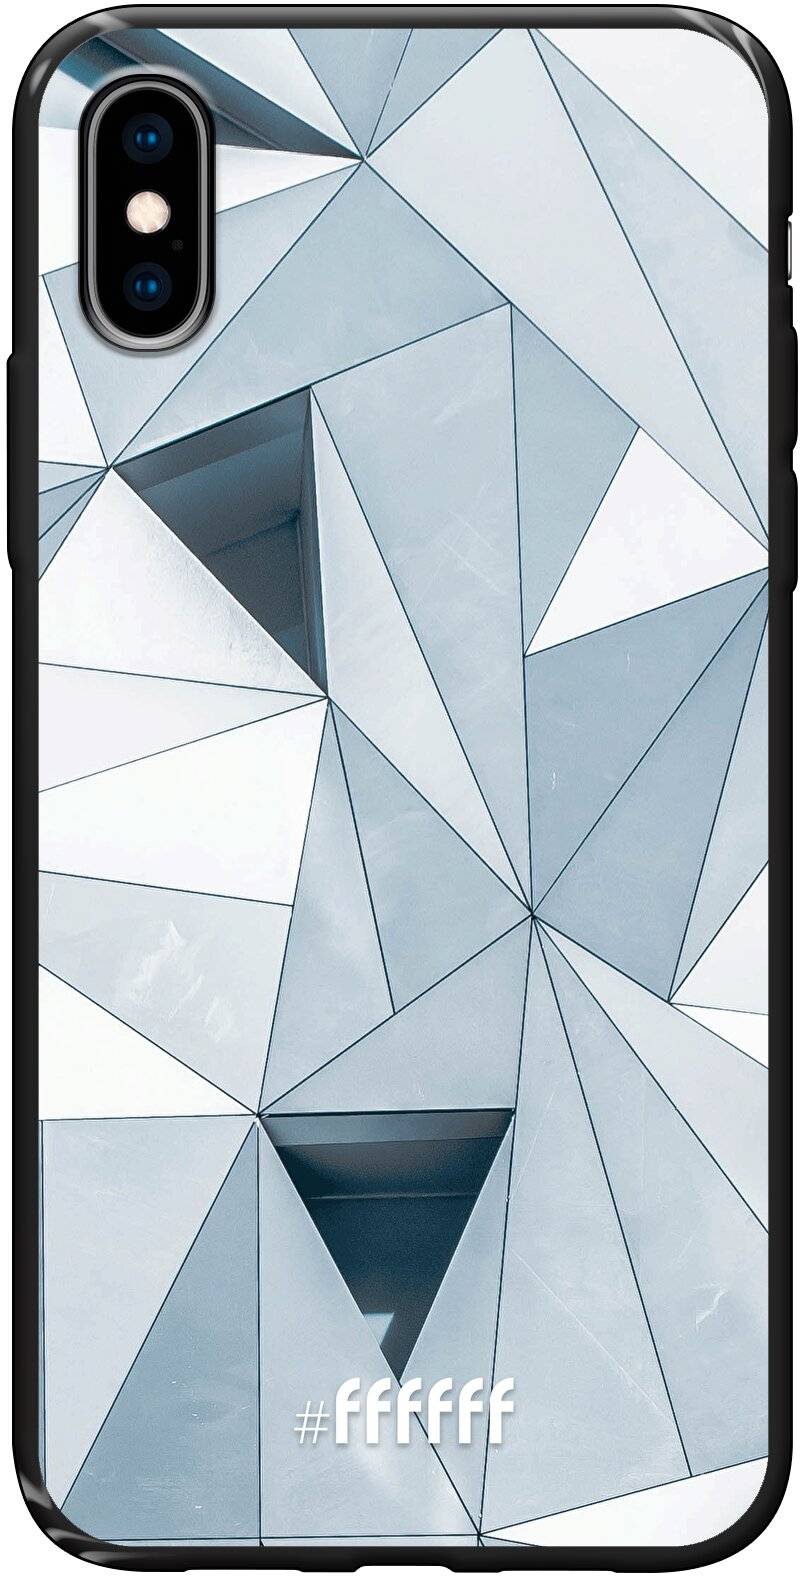 Mirrored Polygon iPhone X